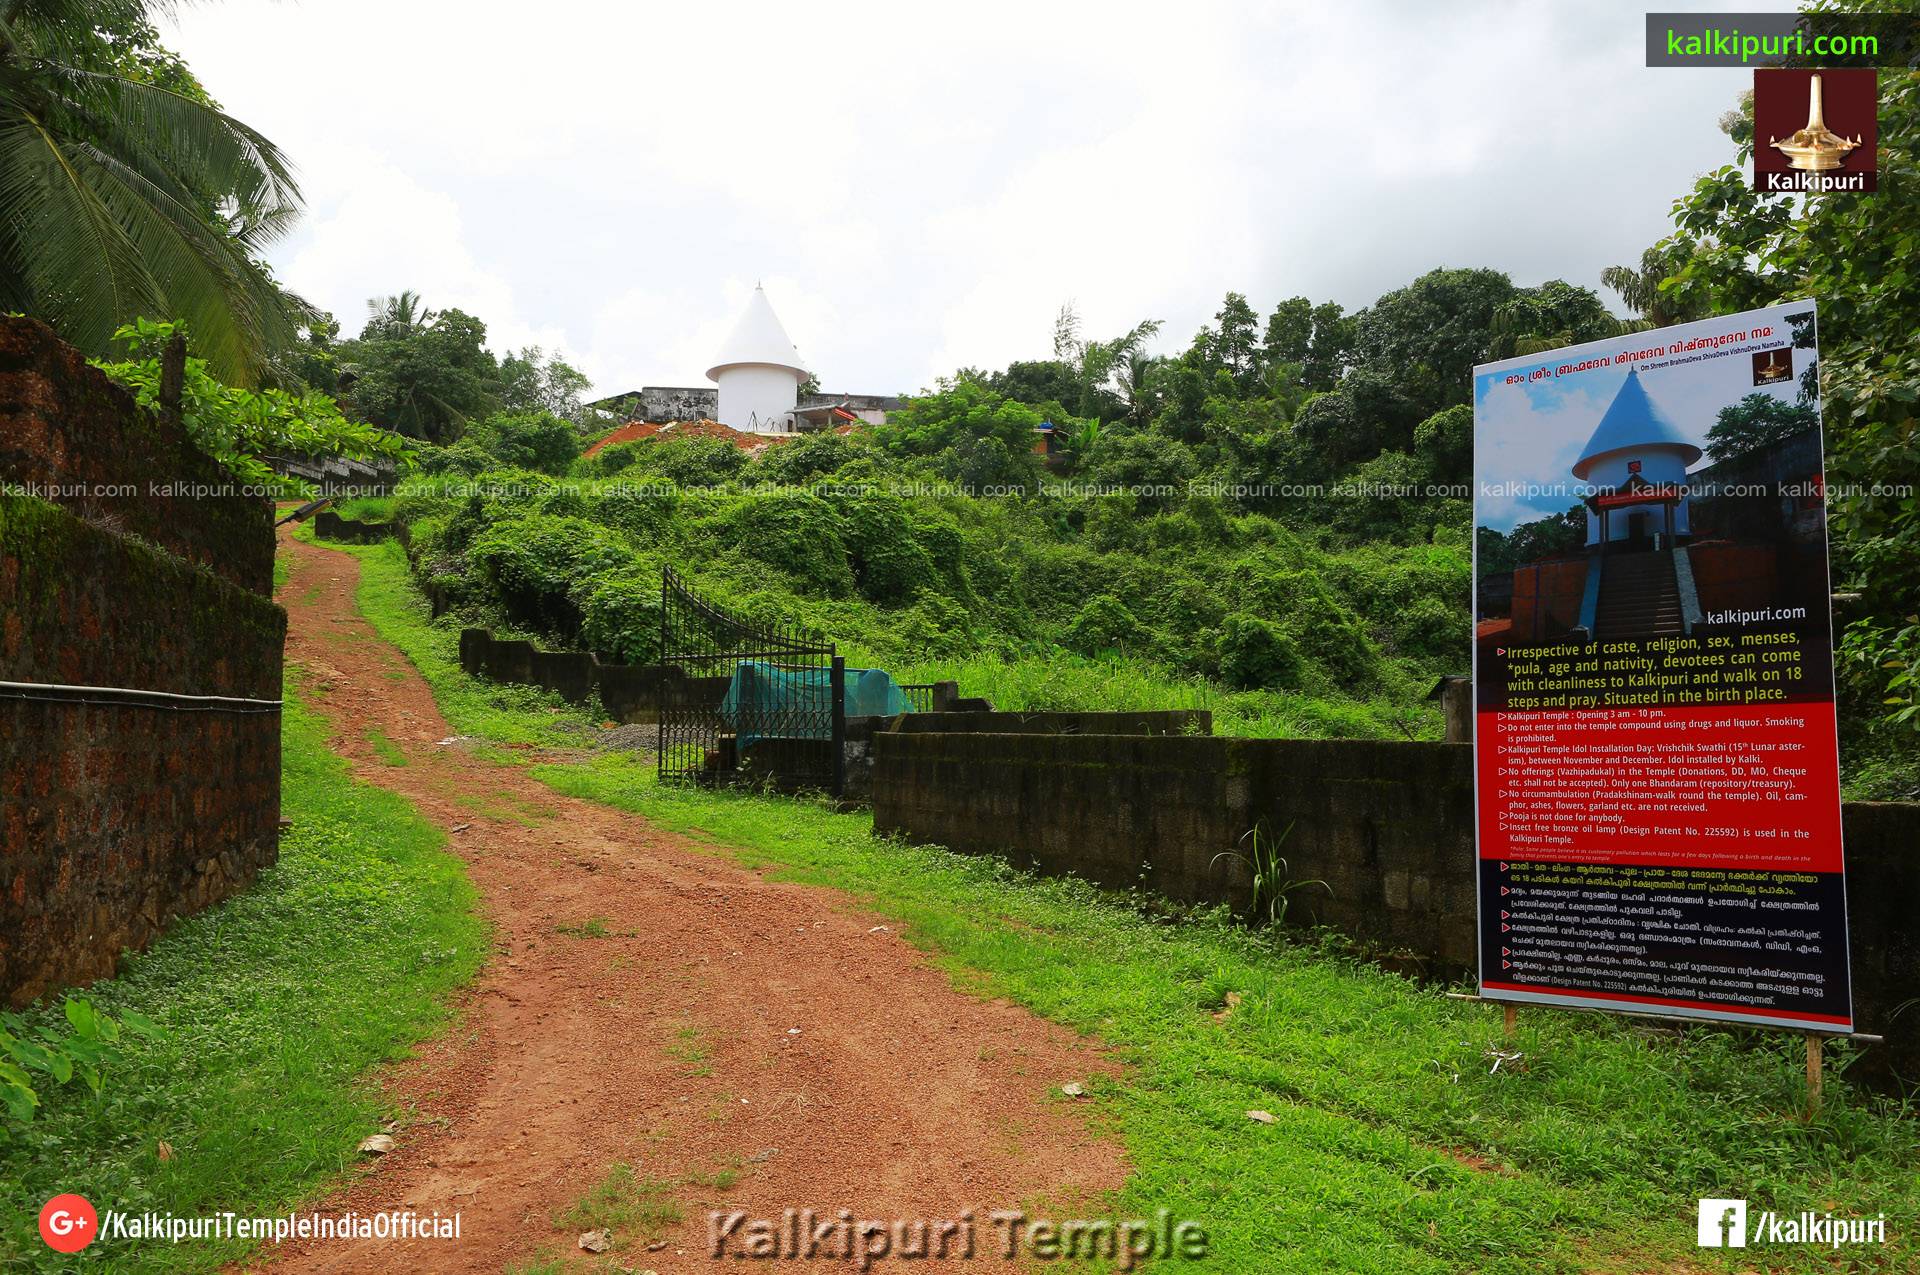 Kalkipuri on 29 Jun 2017. Kalki is the 10th incarnation of Lord Vishnu and founder of Kalkipuri estd. in 2001 at His birth place.